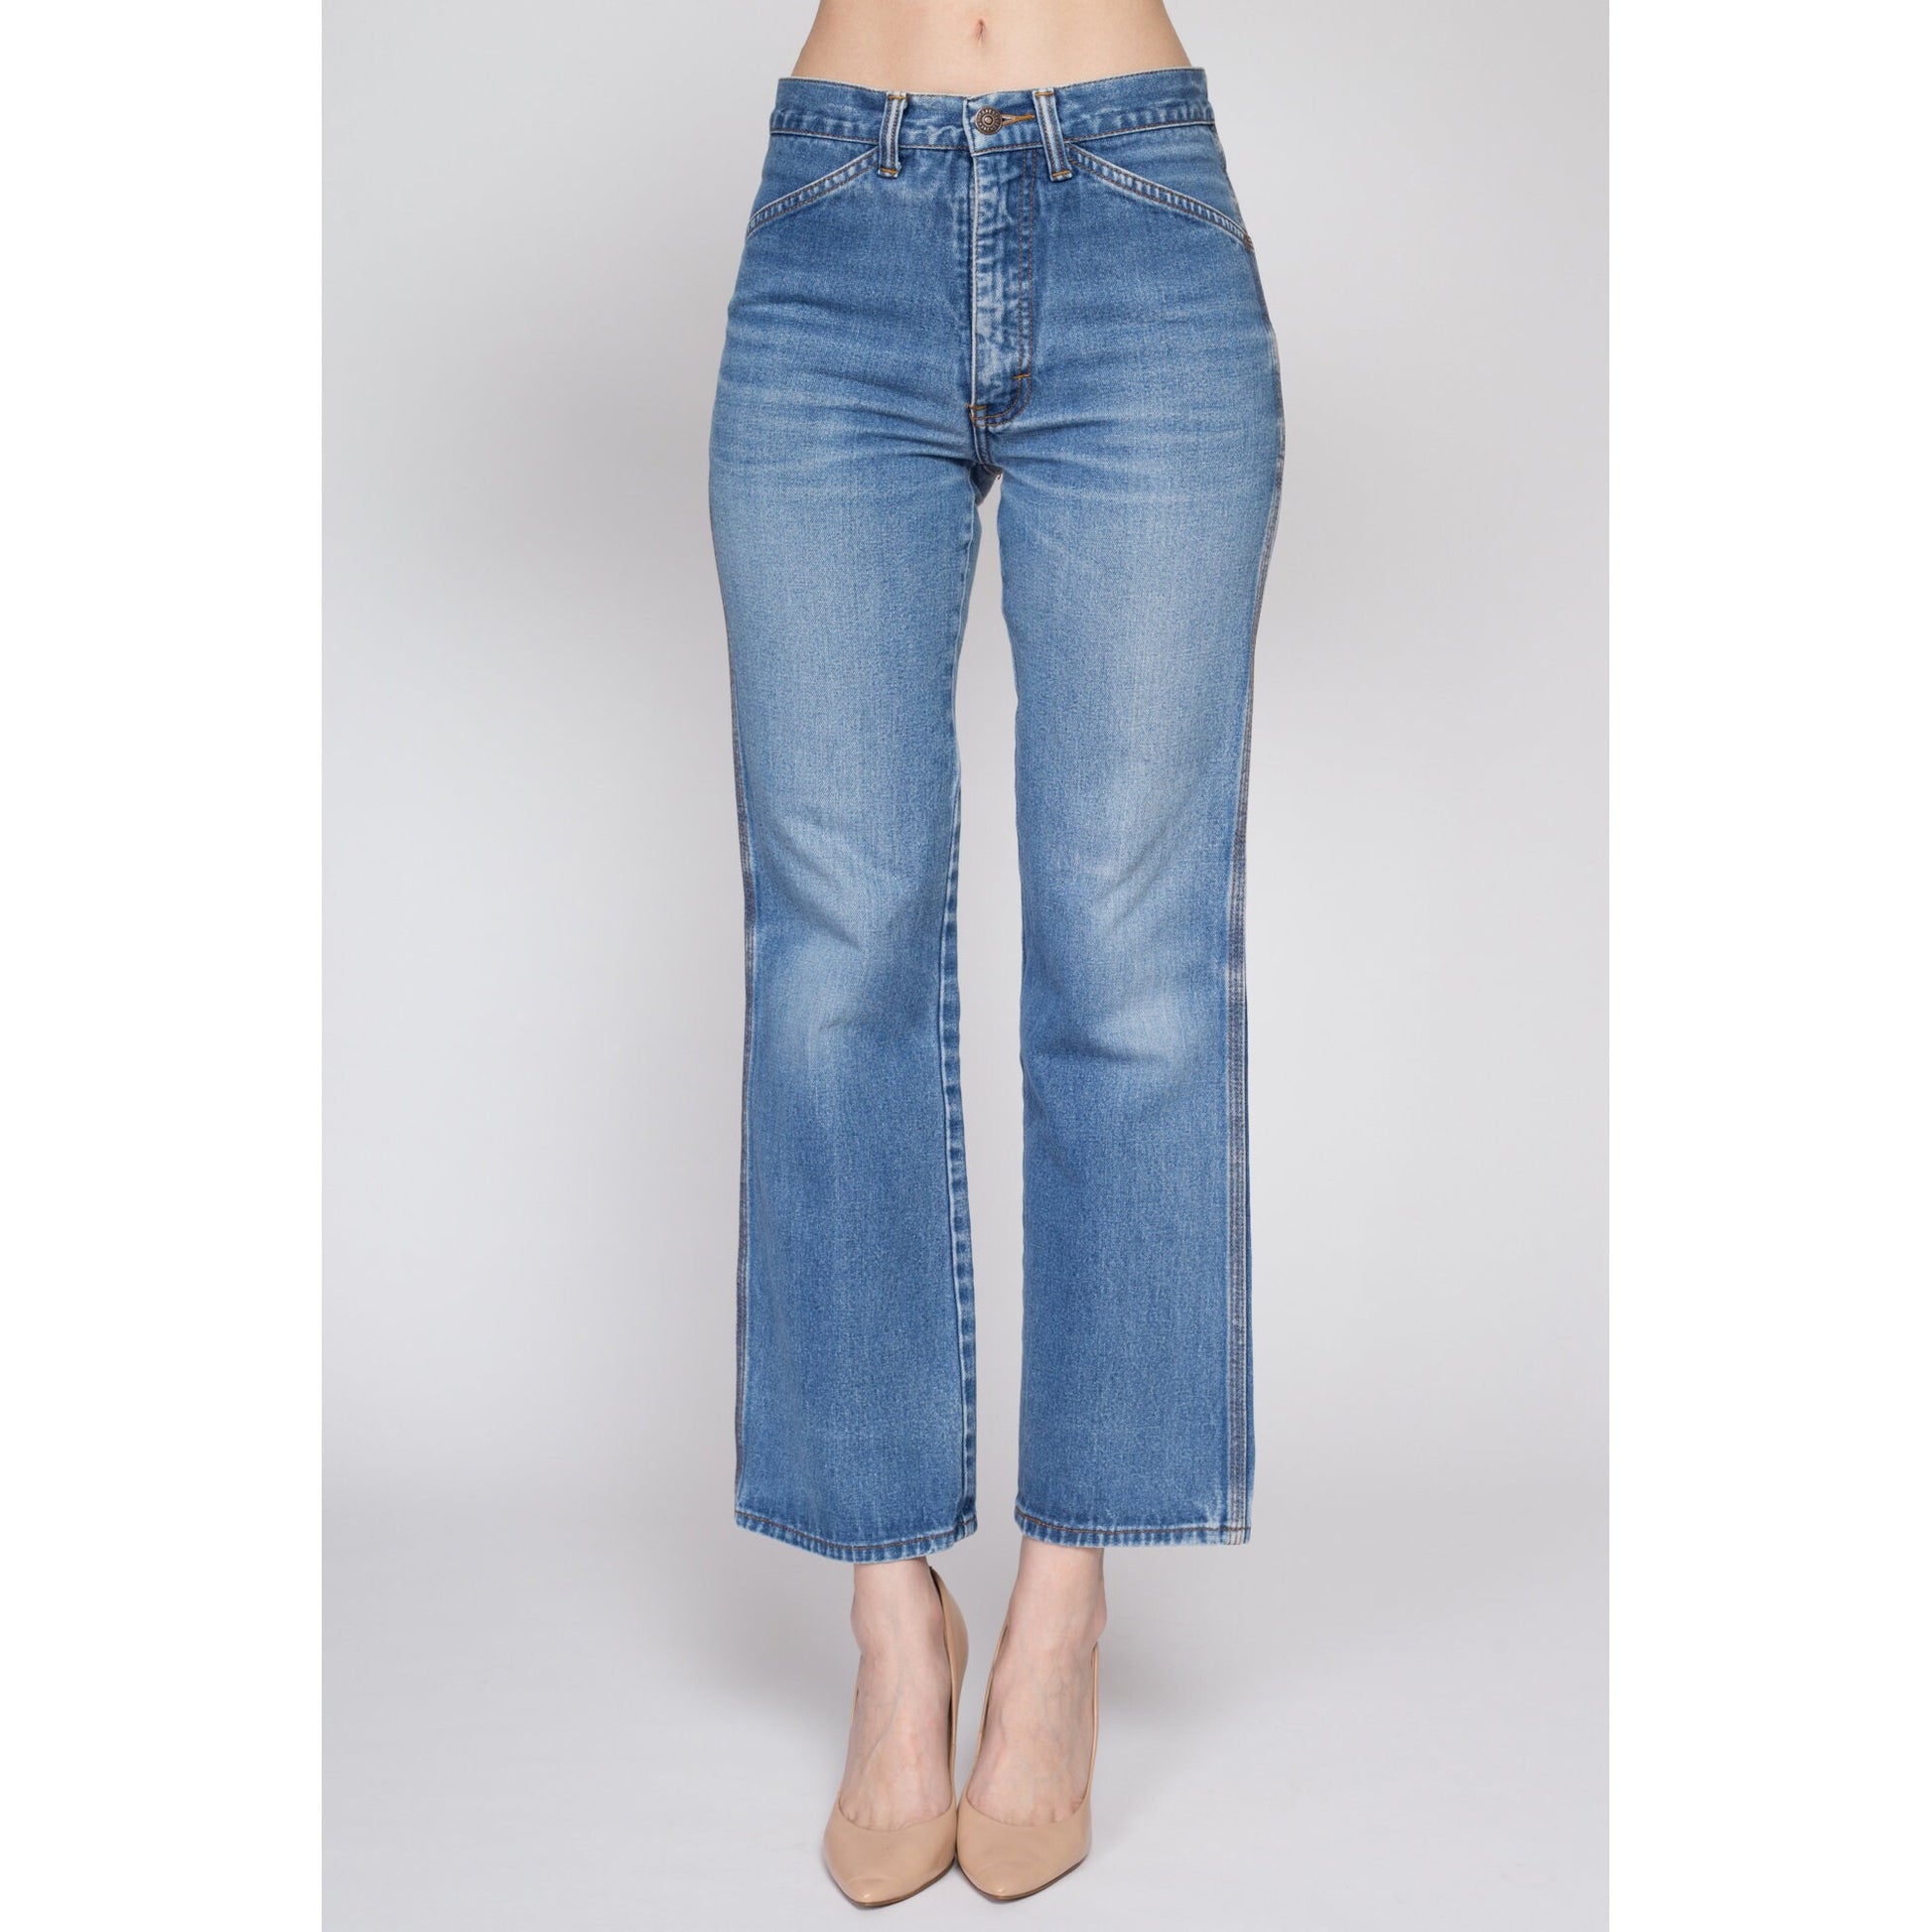 XS-Sm 70s Gap Mid Rise Jeans Petite | Vintage Medium Wash Denim Boho Flares